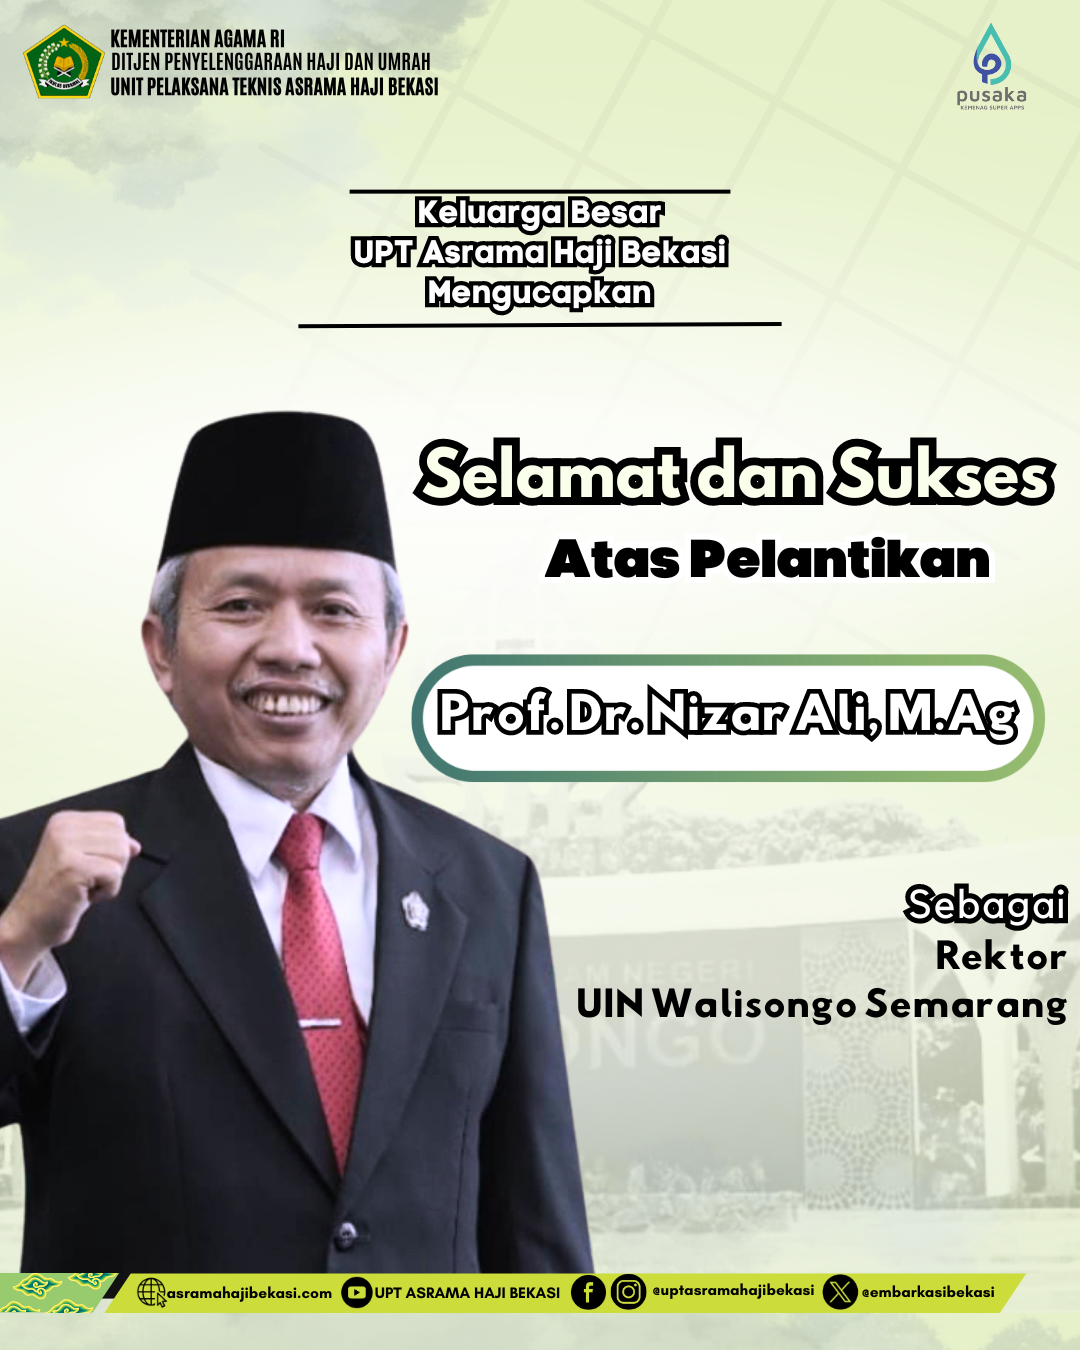 Selamat dan Sukses Atas Pelantikan  Rektor UIN Walisongo Semarang